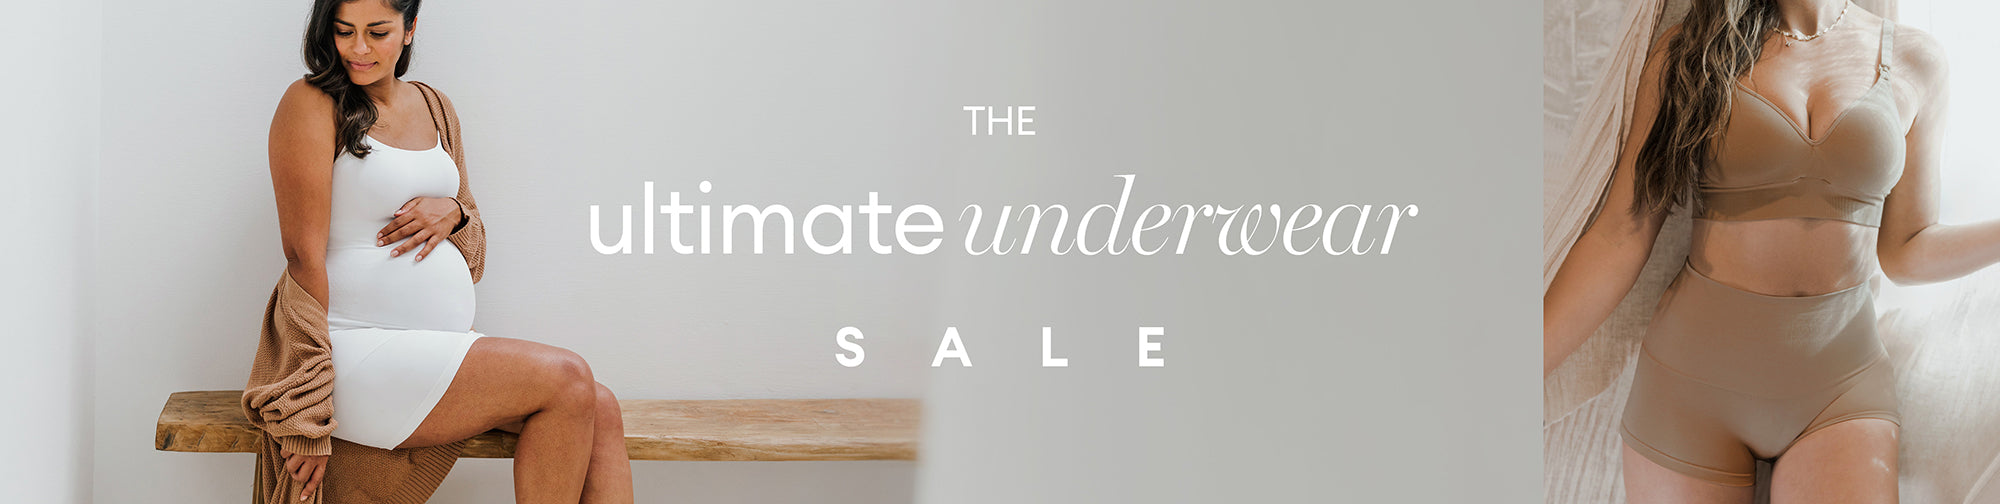 The Ultimate Underwear Sale